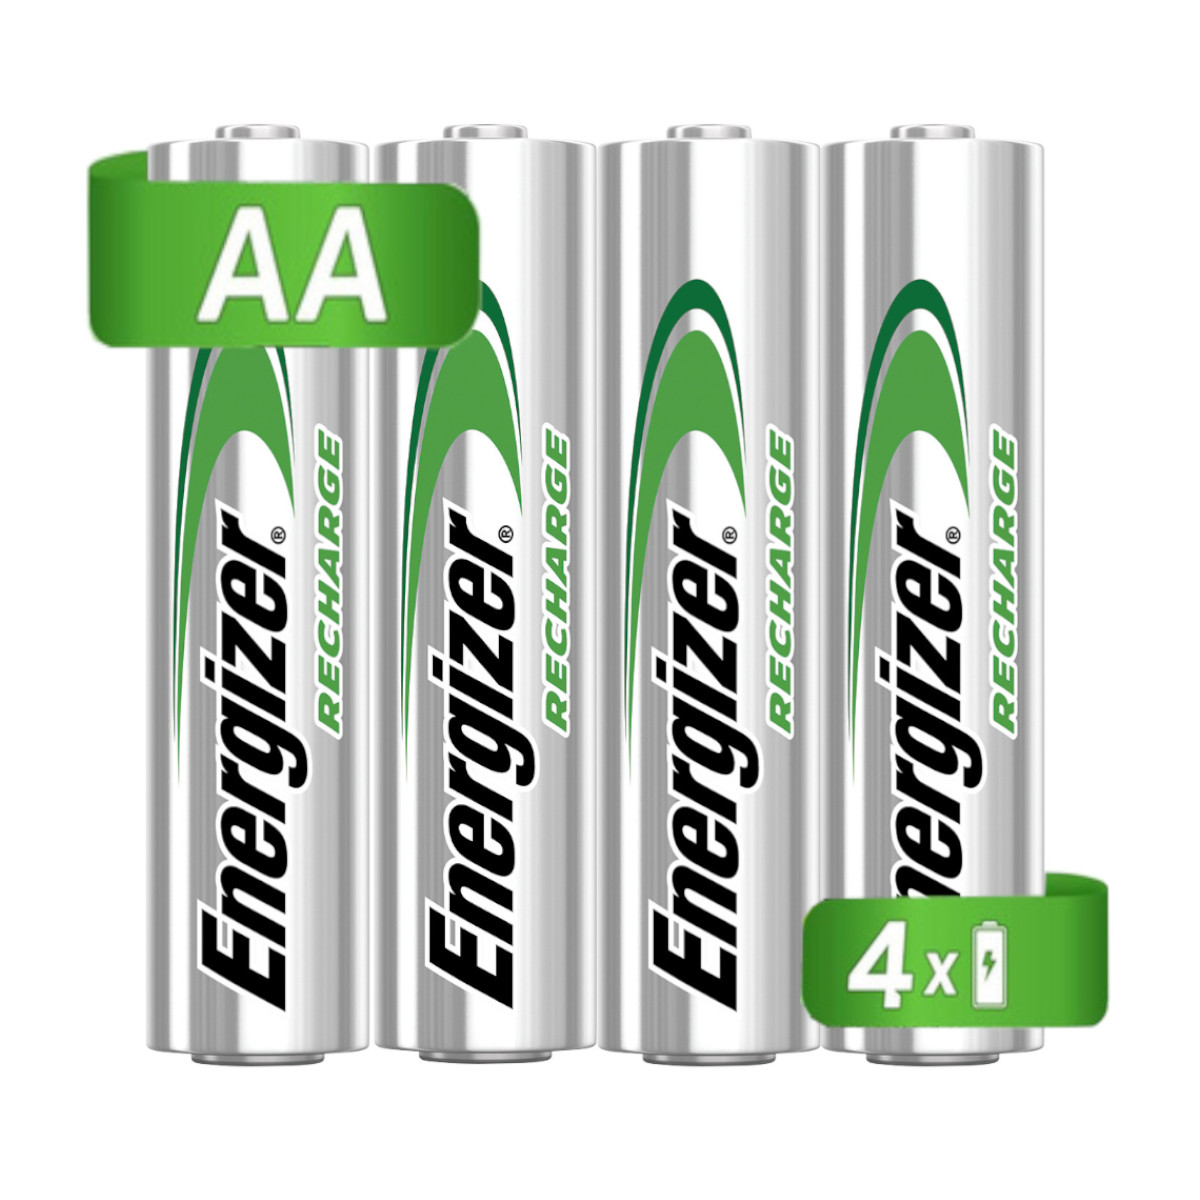 Pila Energizer Recargable Con 6 Pilas Aa Y 4 Pilas Aaa 1.2v